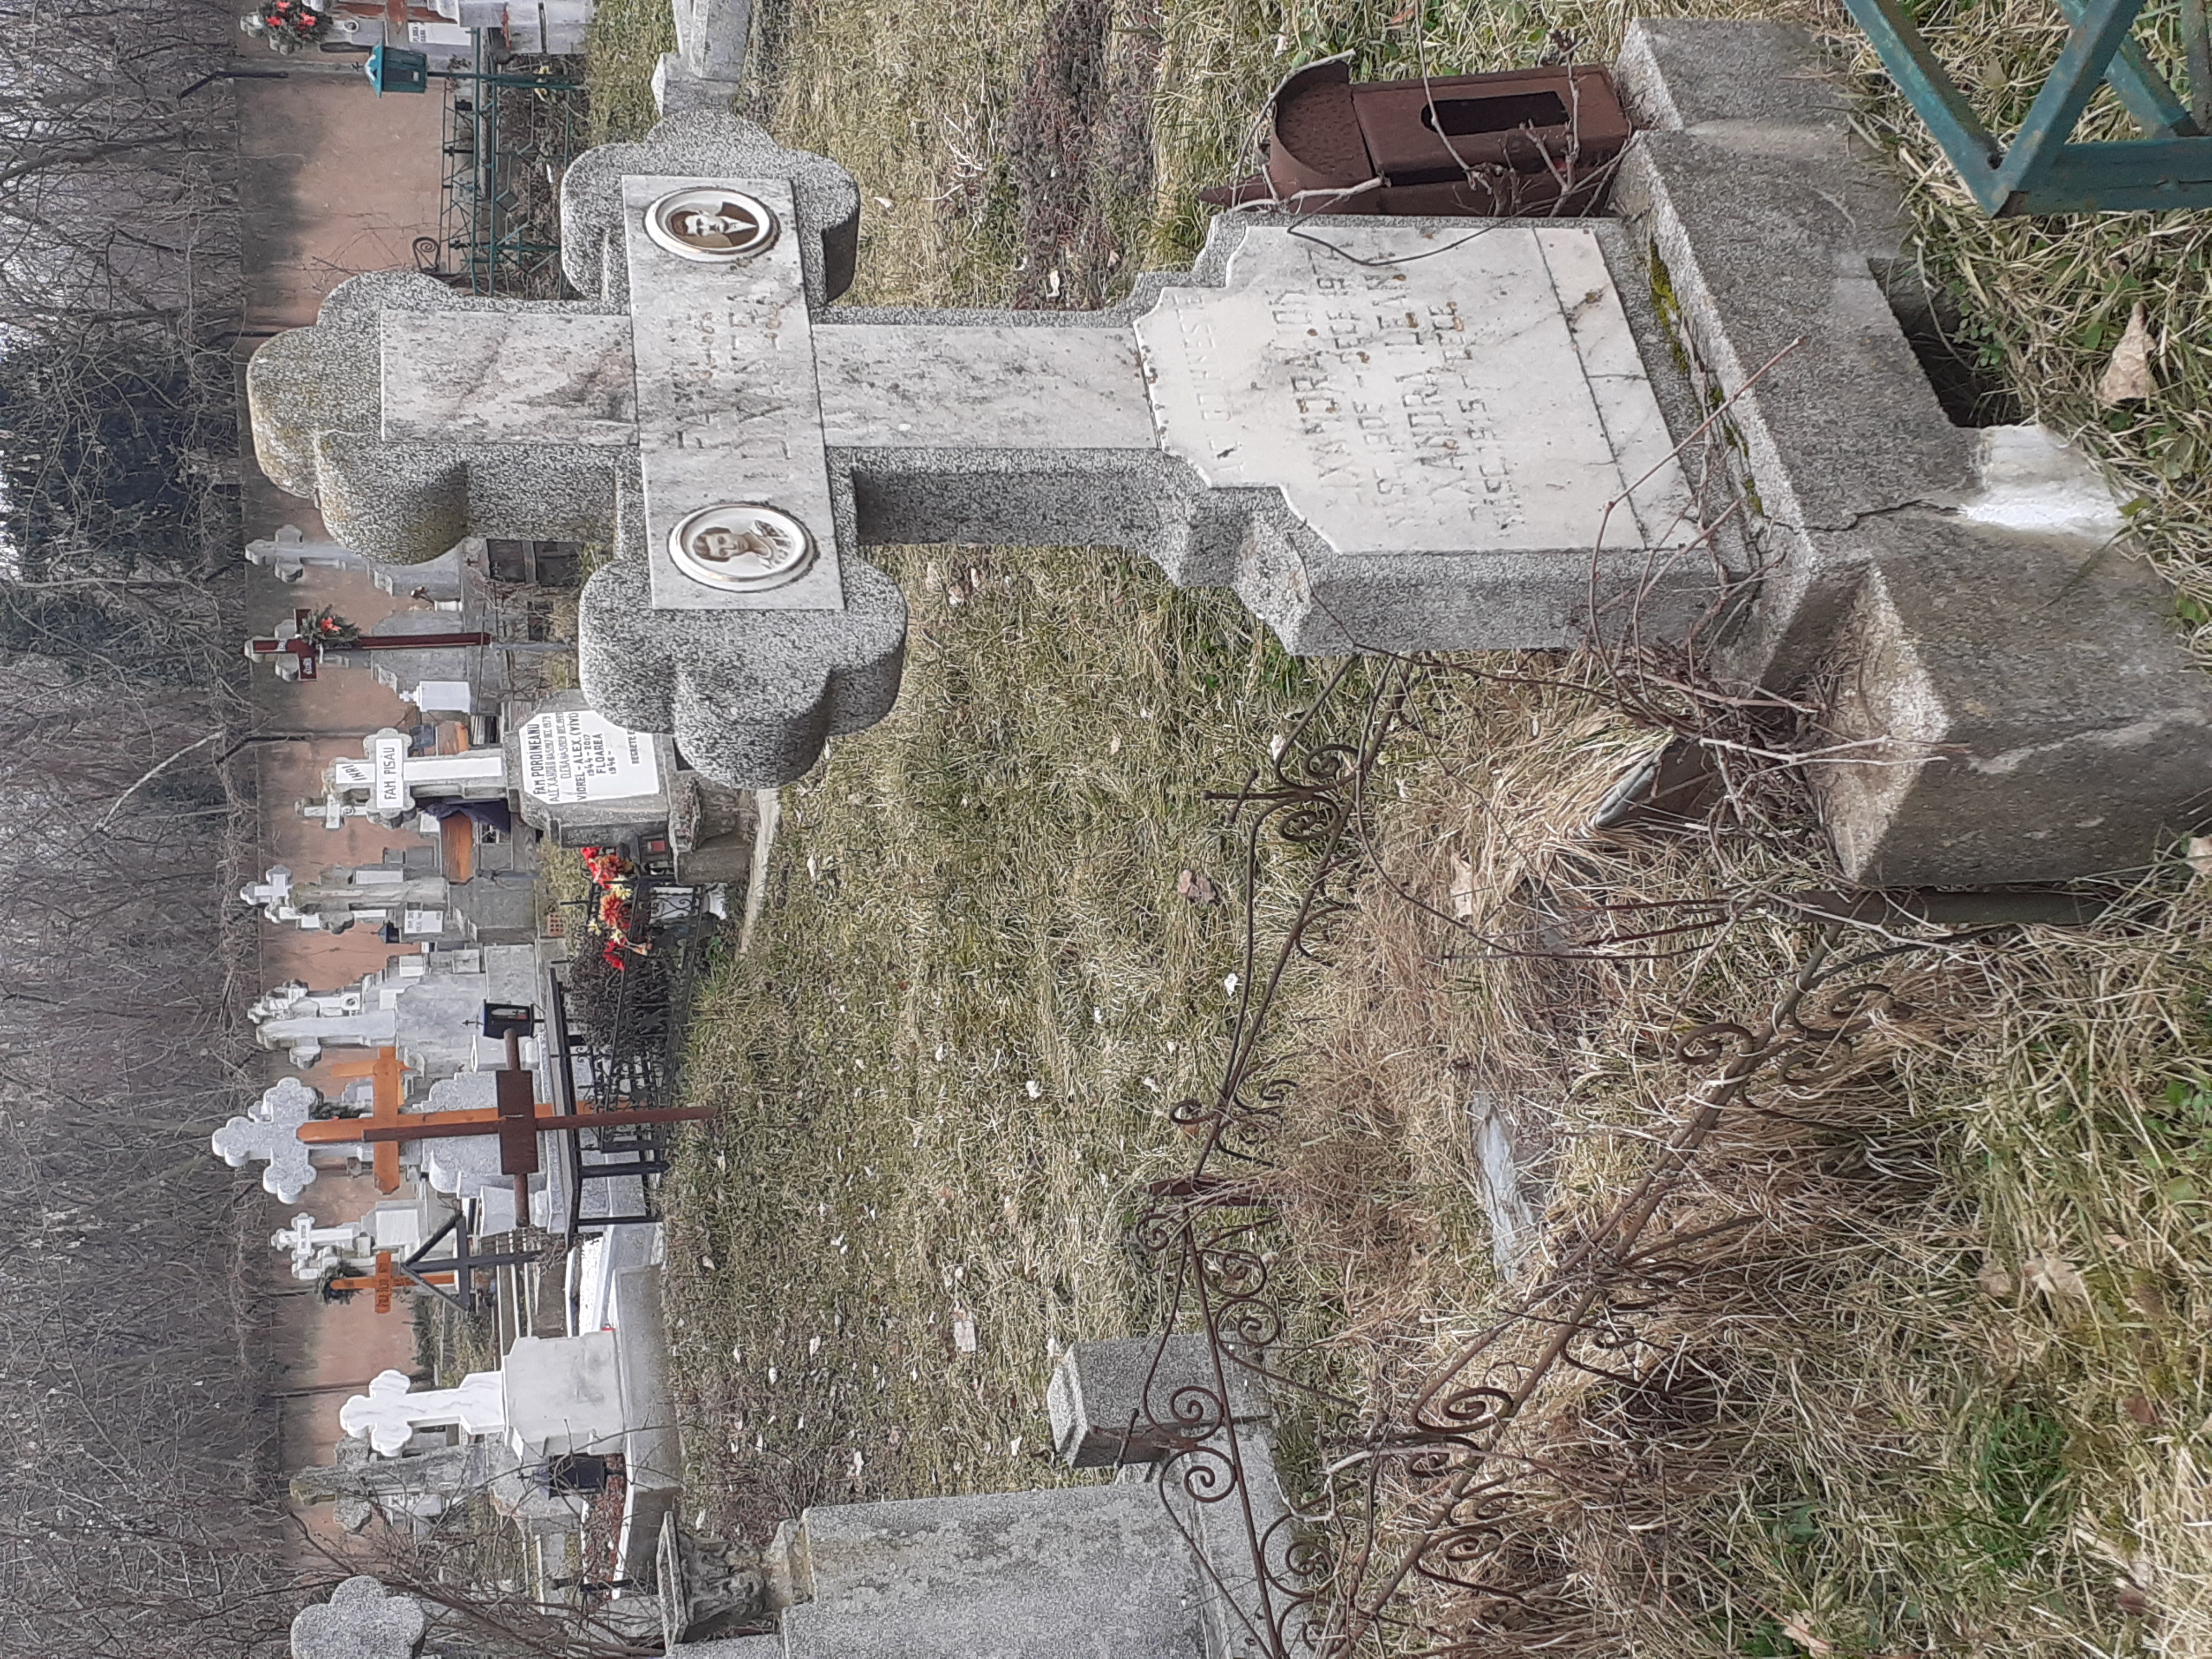 Loc de veci - Cimitirul Damaroaia